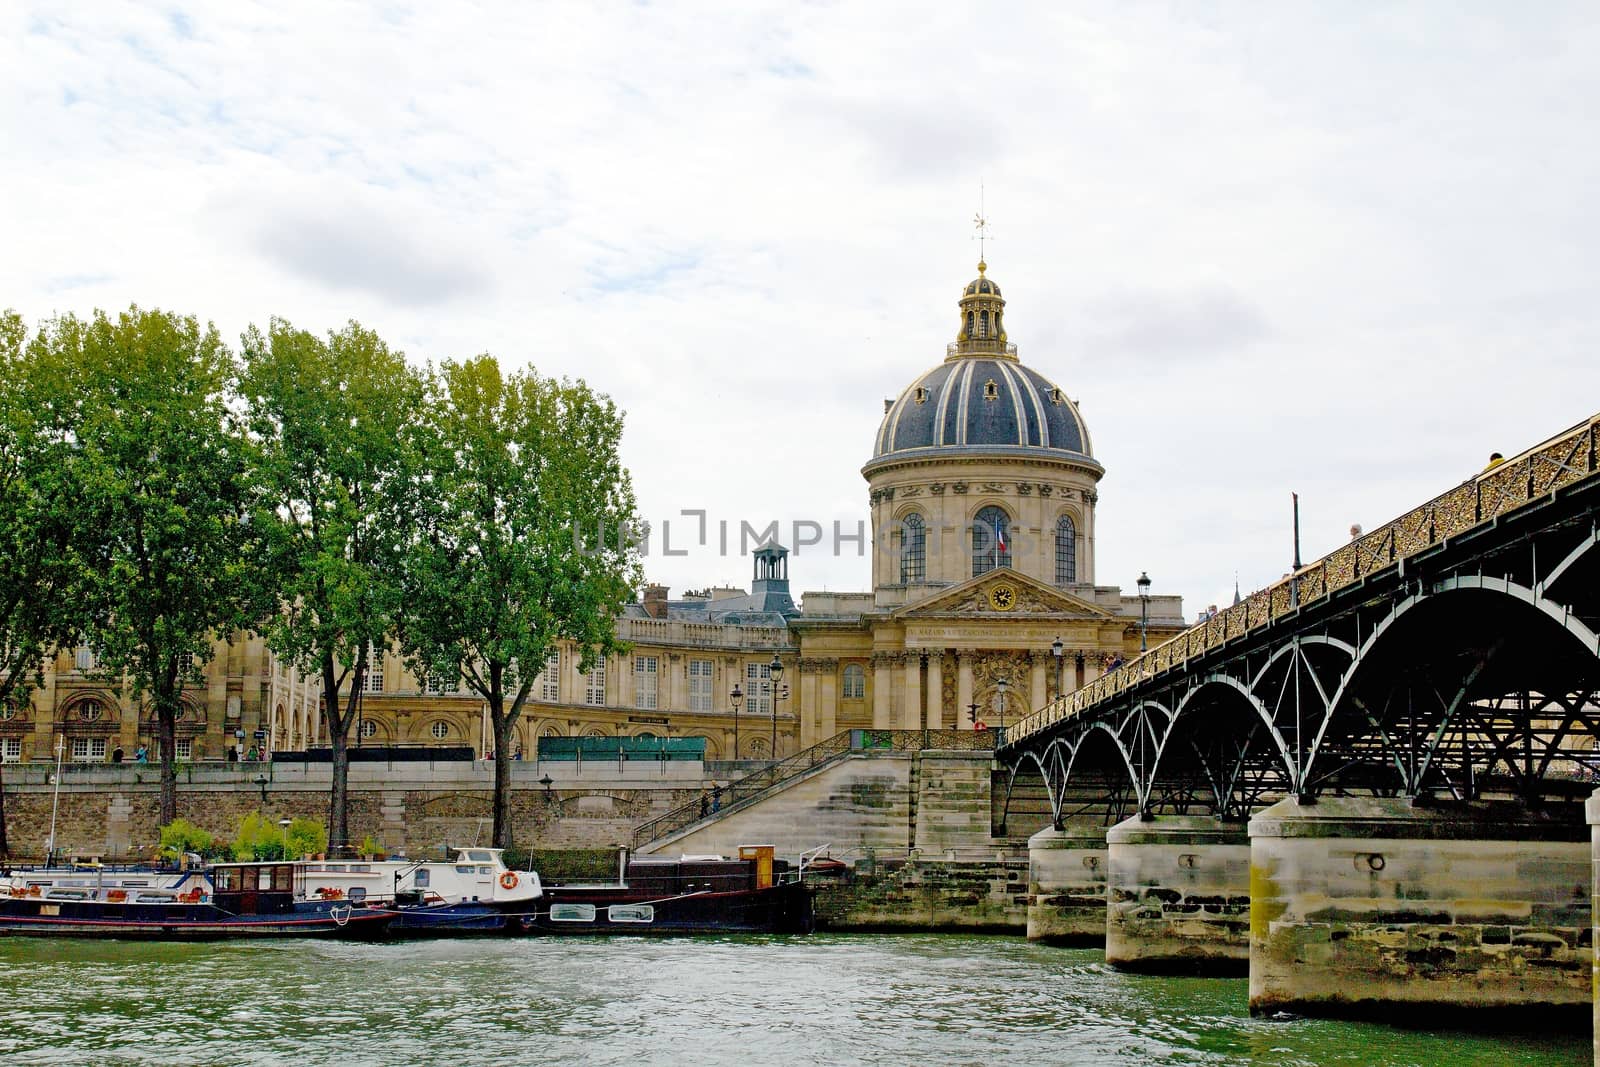 Parisian river view by Dermot68